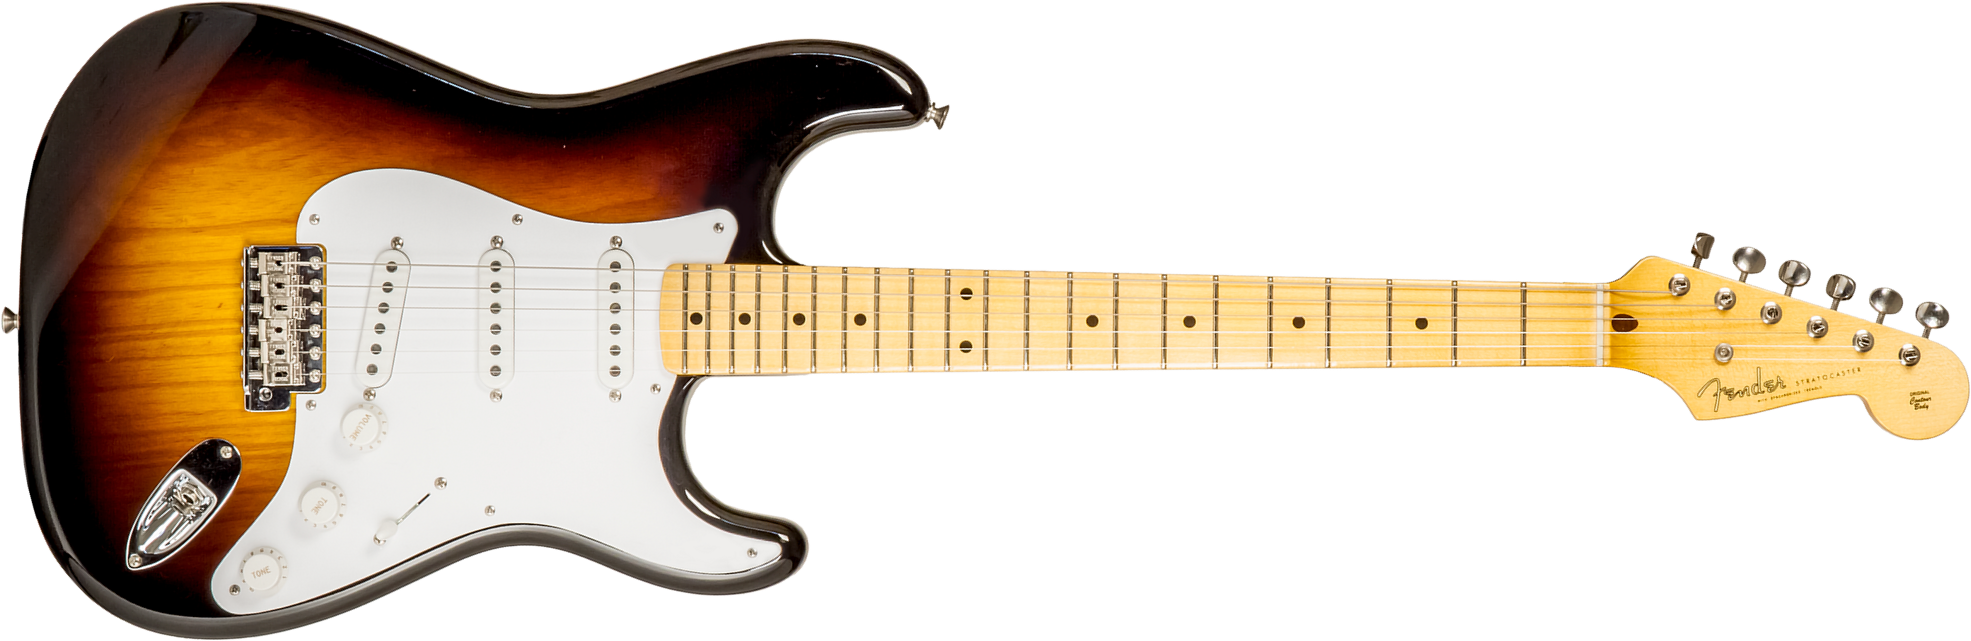 Fender Custom Shop Strat 1954 70th Anniv. #xn4597 3s Trem Mn - Time Capsule 2-color Sunburst - E-Gitarre in Str-Form - Main picture